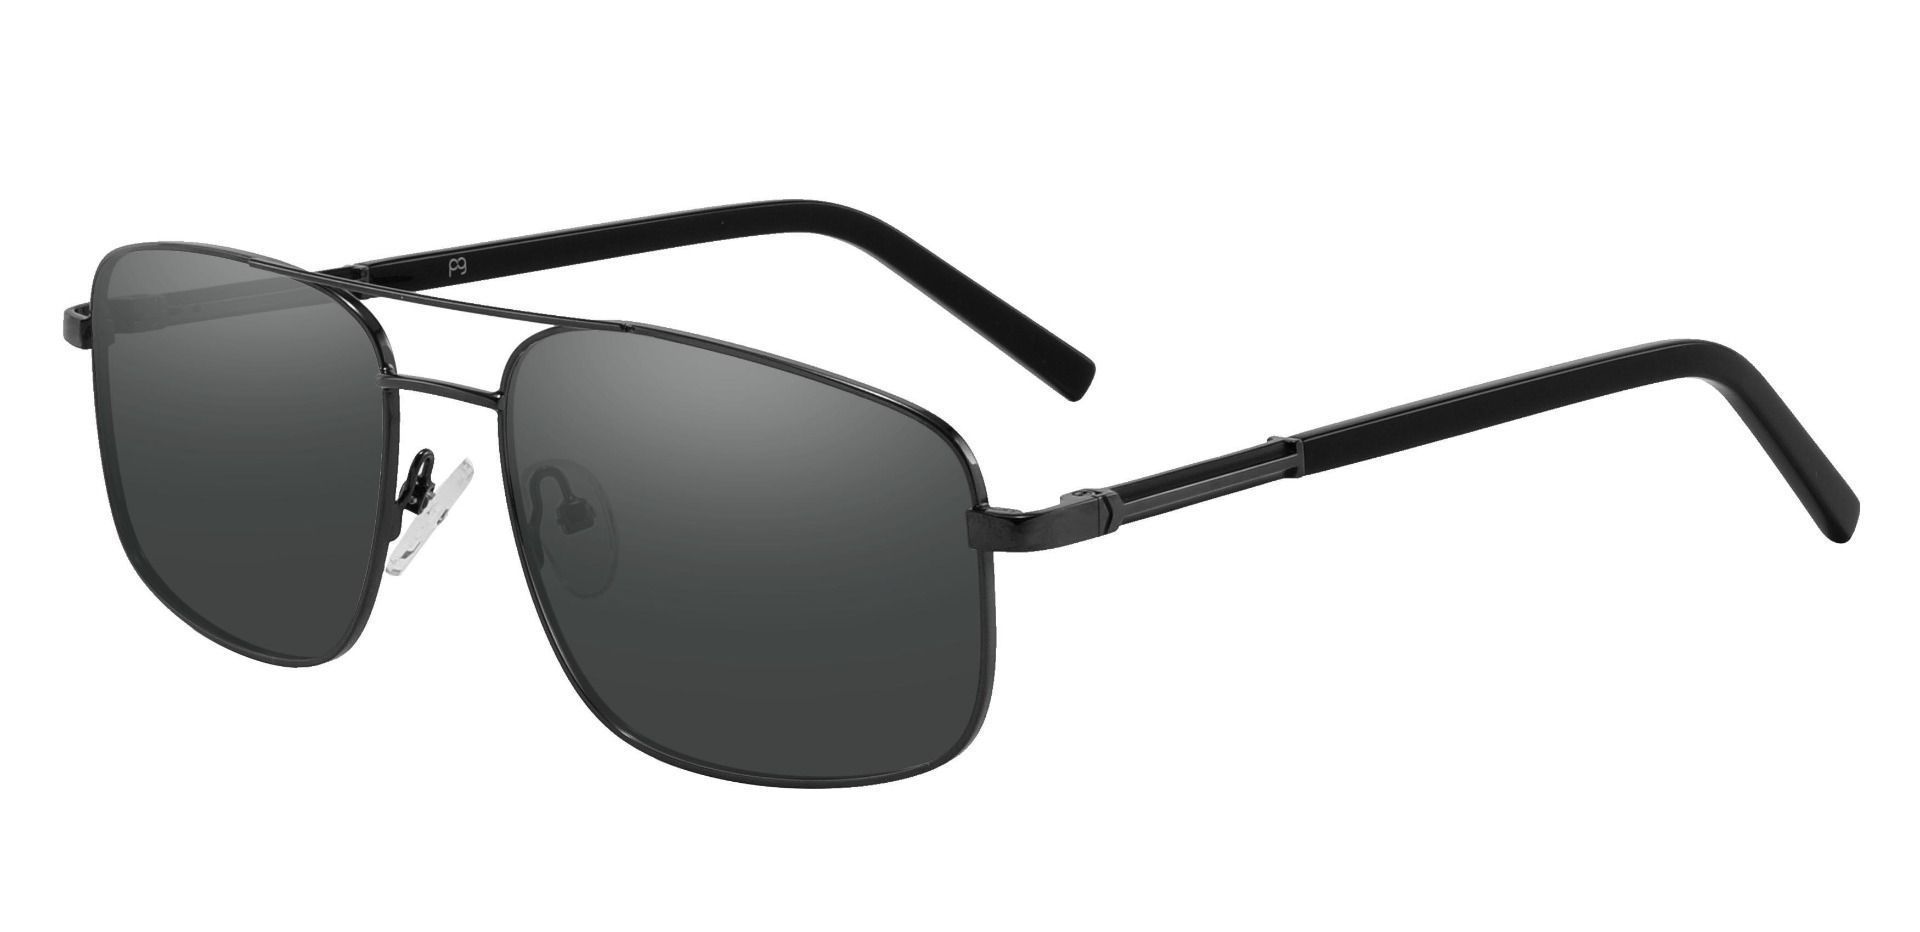 Davenport Aviator Non-Rx Sunglasses - Black Frame With Gray Lenses